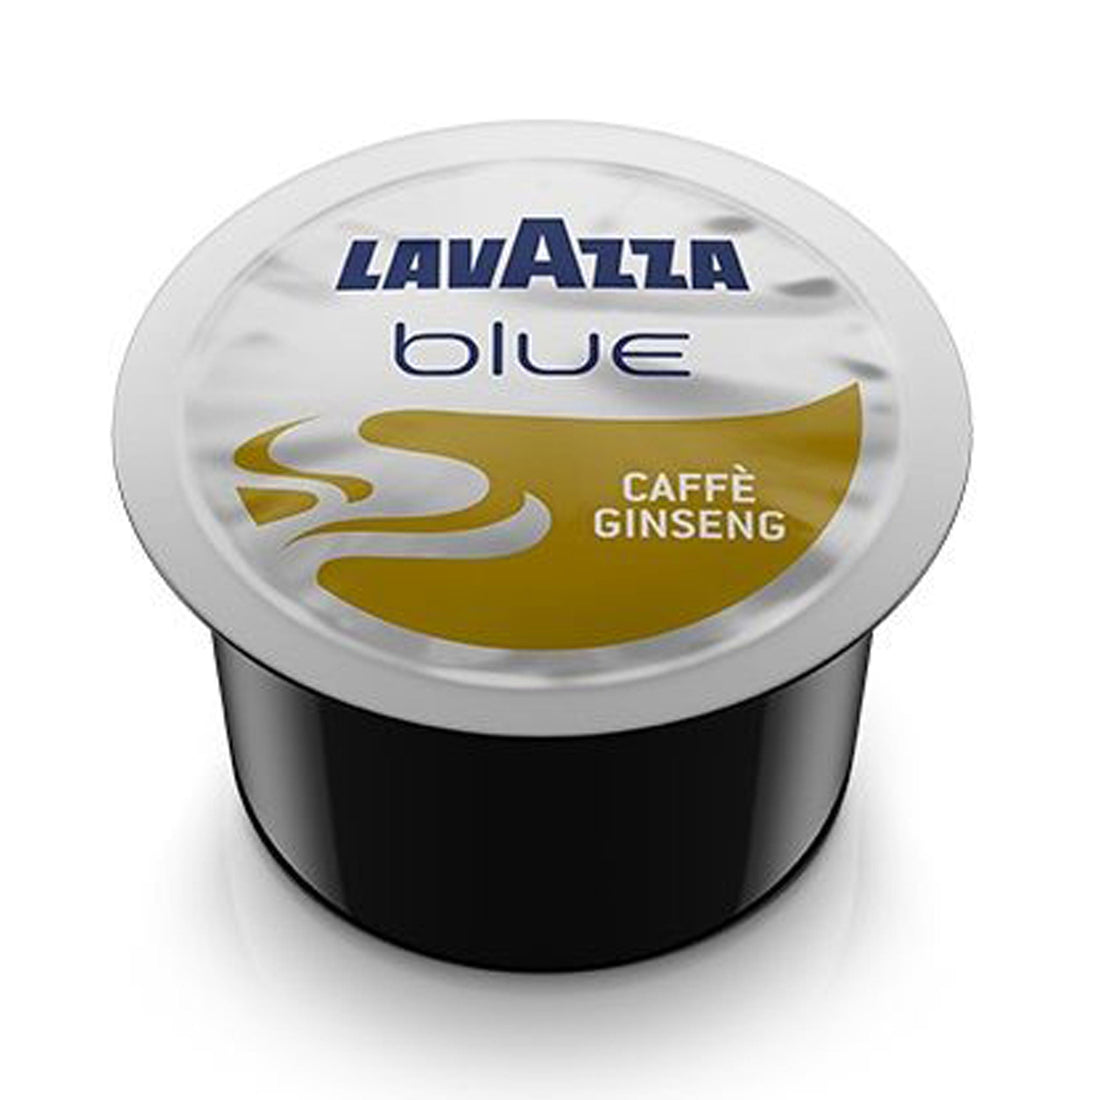 Ginseng Lavazza Blue (Kapseln) – Leichte und bekömmliche Ginseng-Kaffeealternative